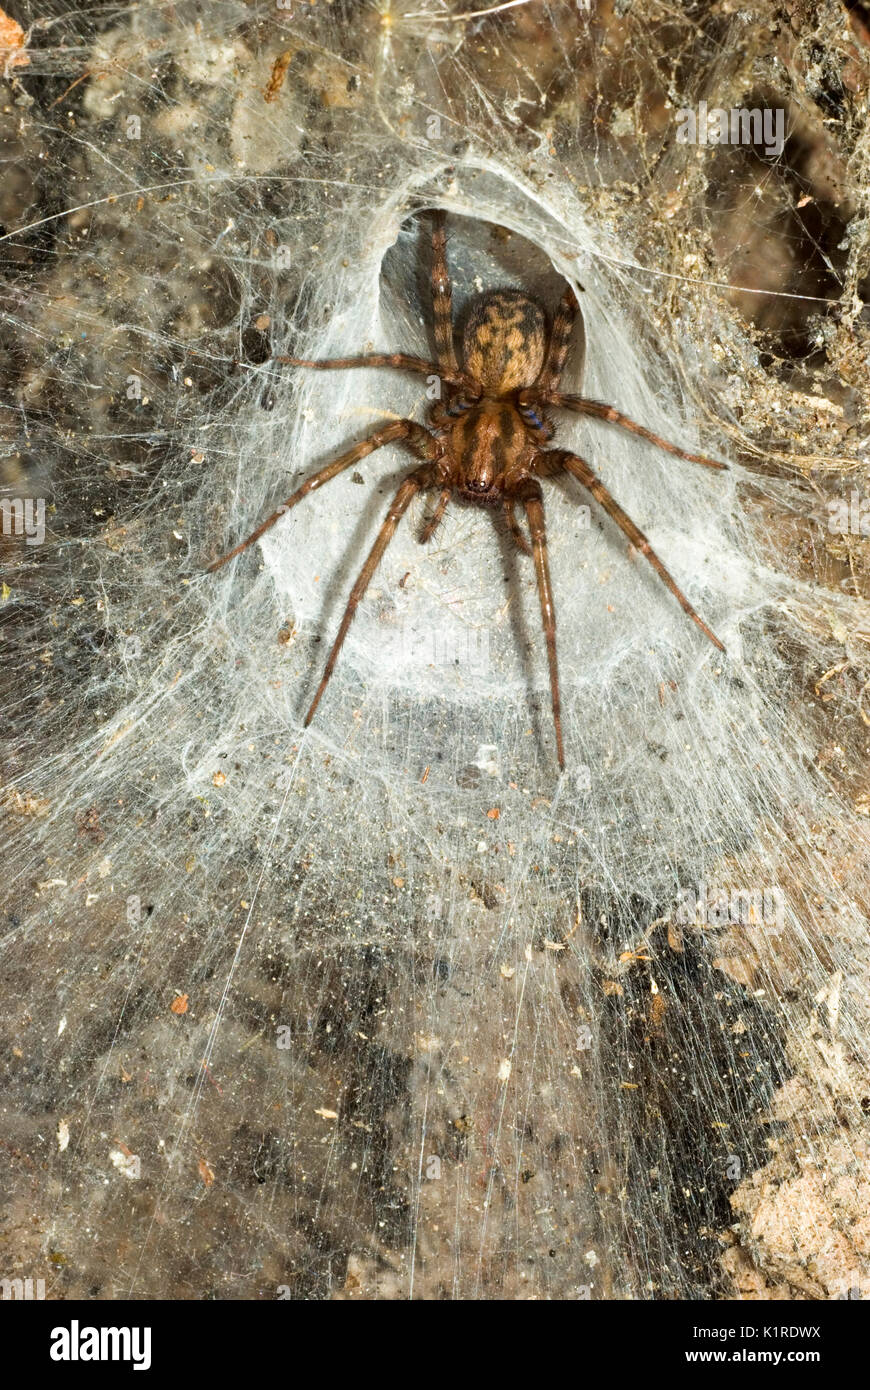 Tegenaria Spider Stockfoto